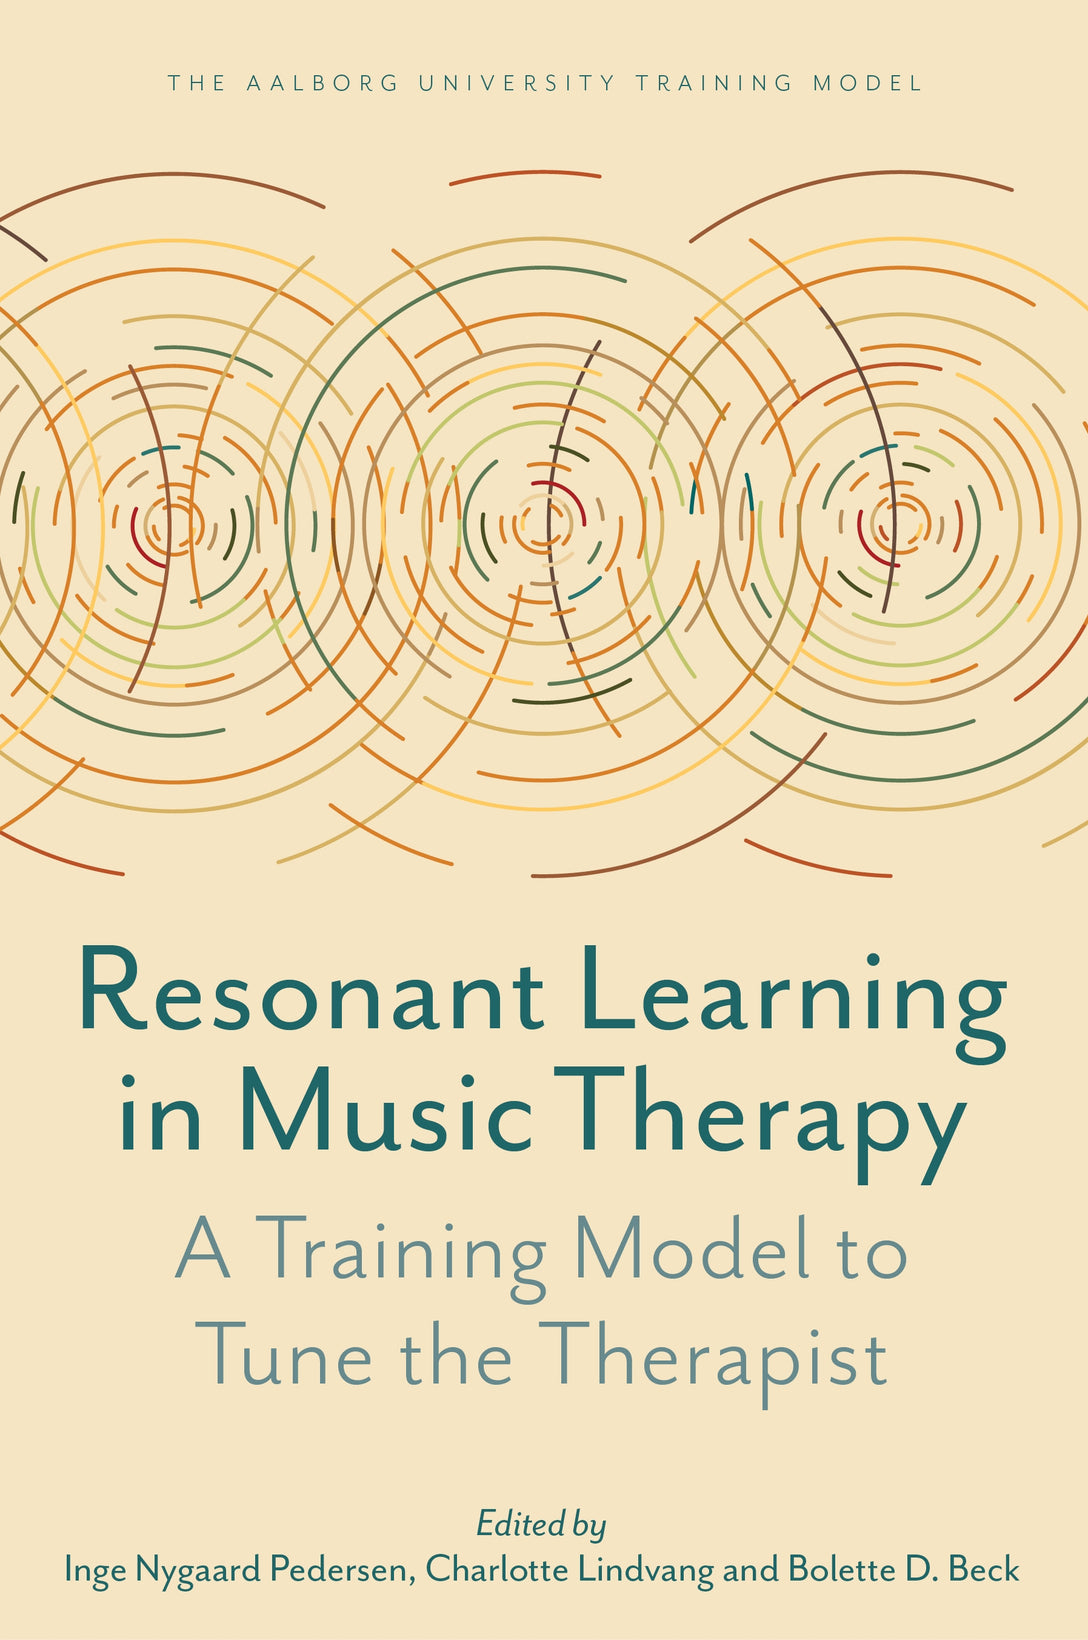 Resonant Learning in Music Therapy by Inge Nygaard Pedersen, Charlotte Lindvang, No Author Listed, Bolette Daniels Beck, Søren Willert, Helen Odell-Miller